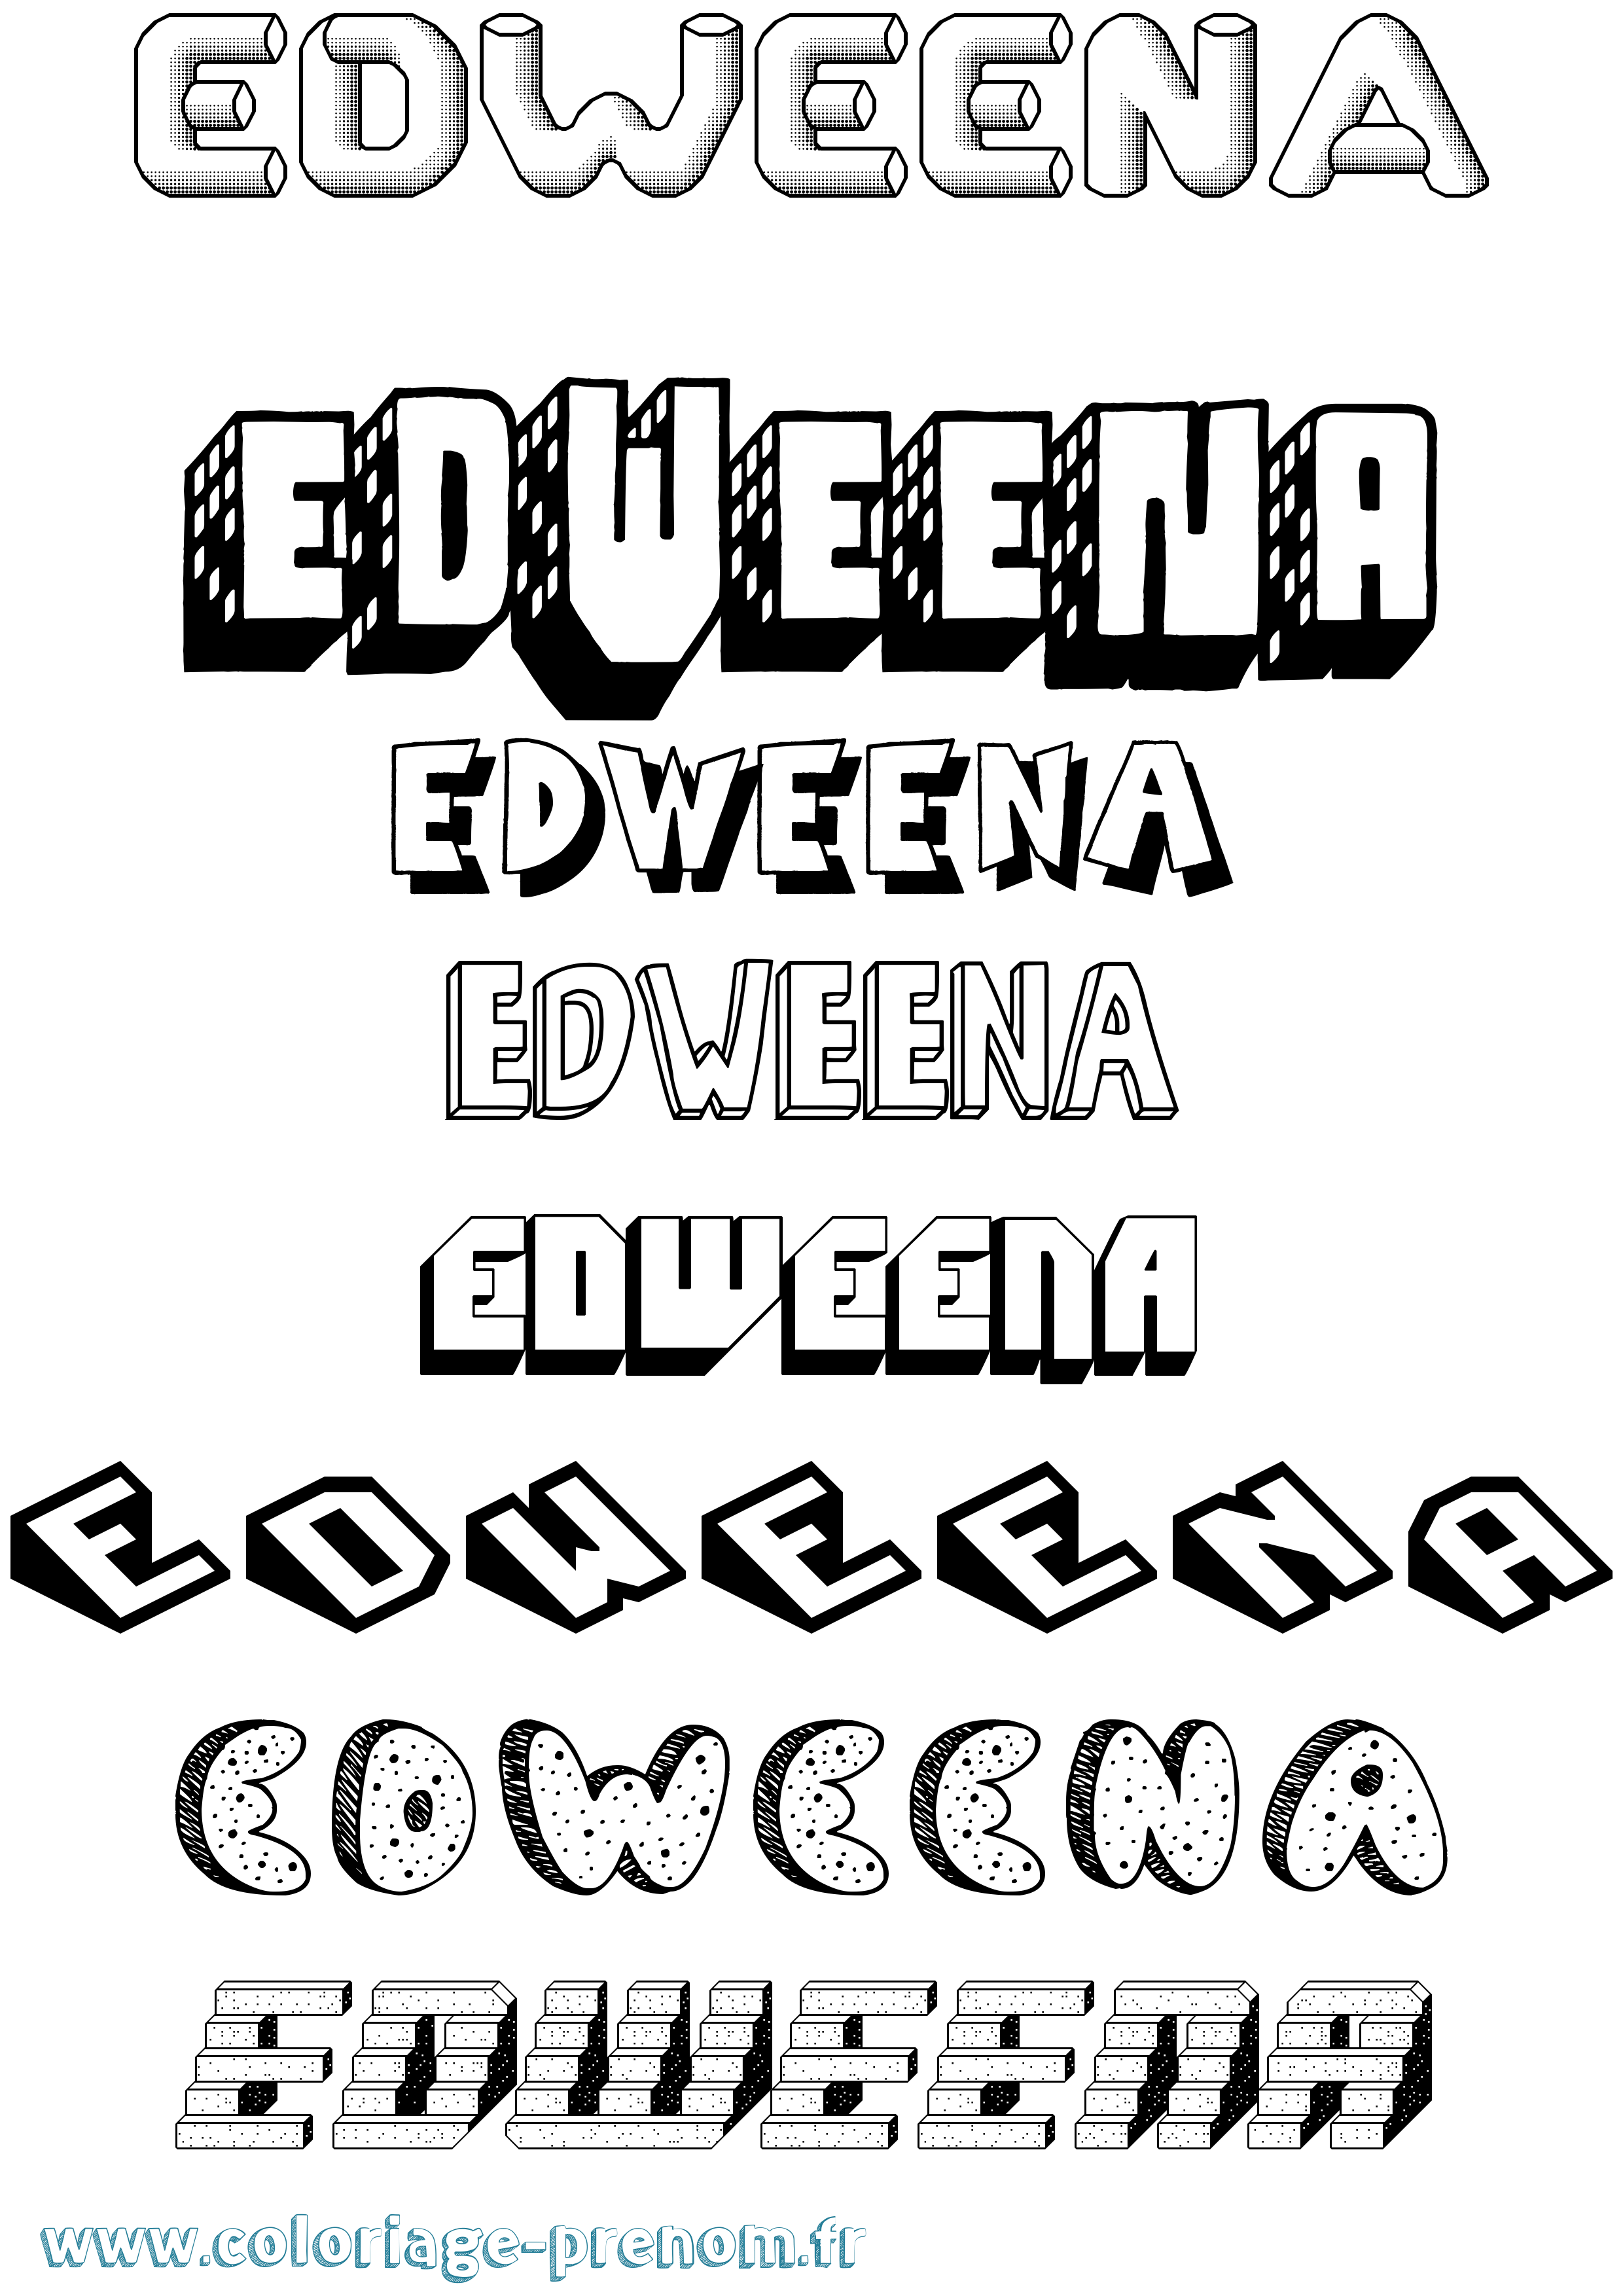 Coloriage prénom Edweena Effet 3D